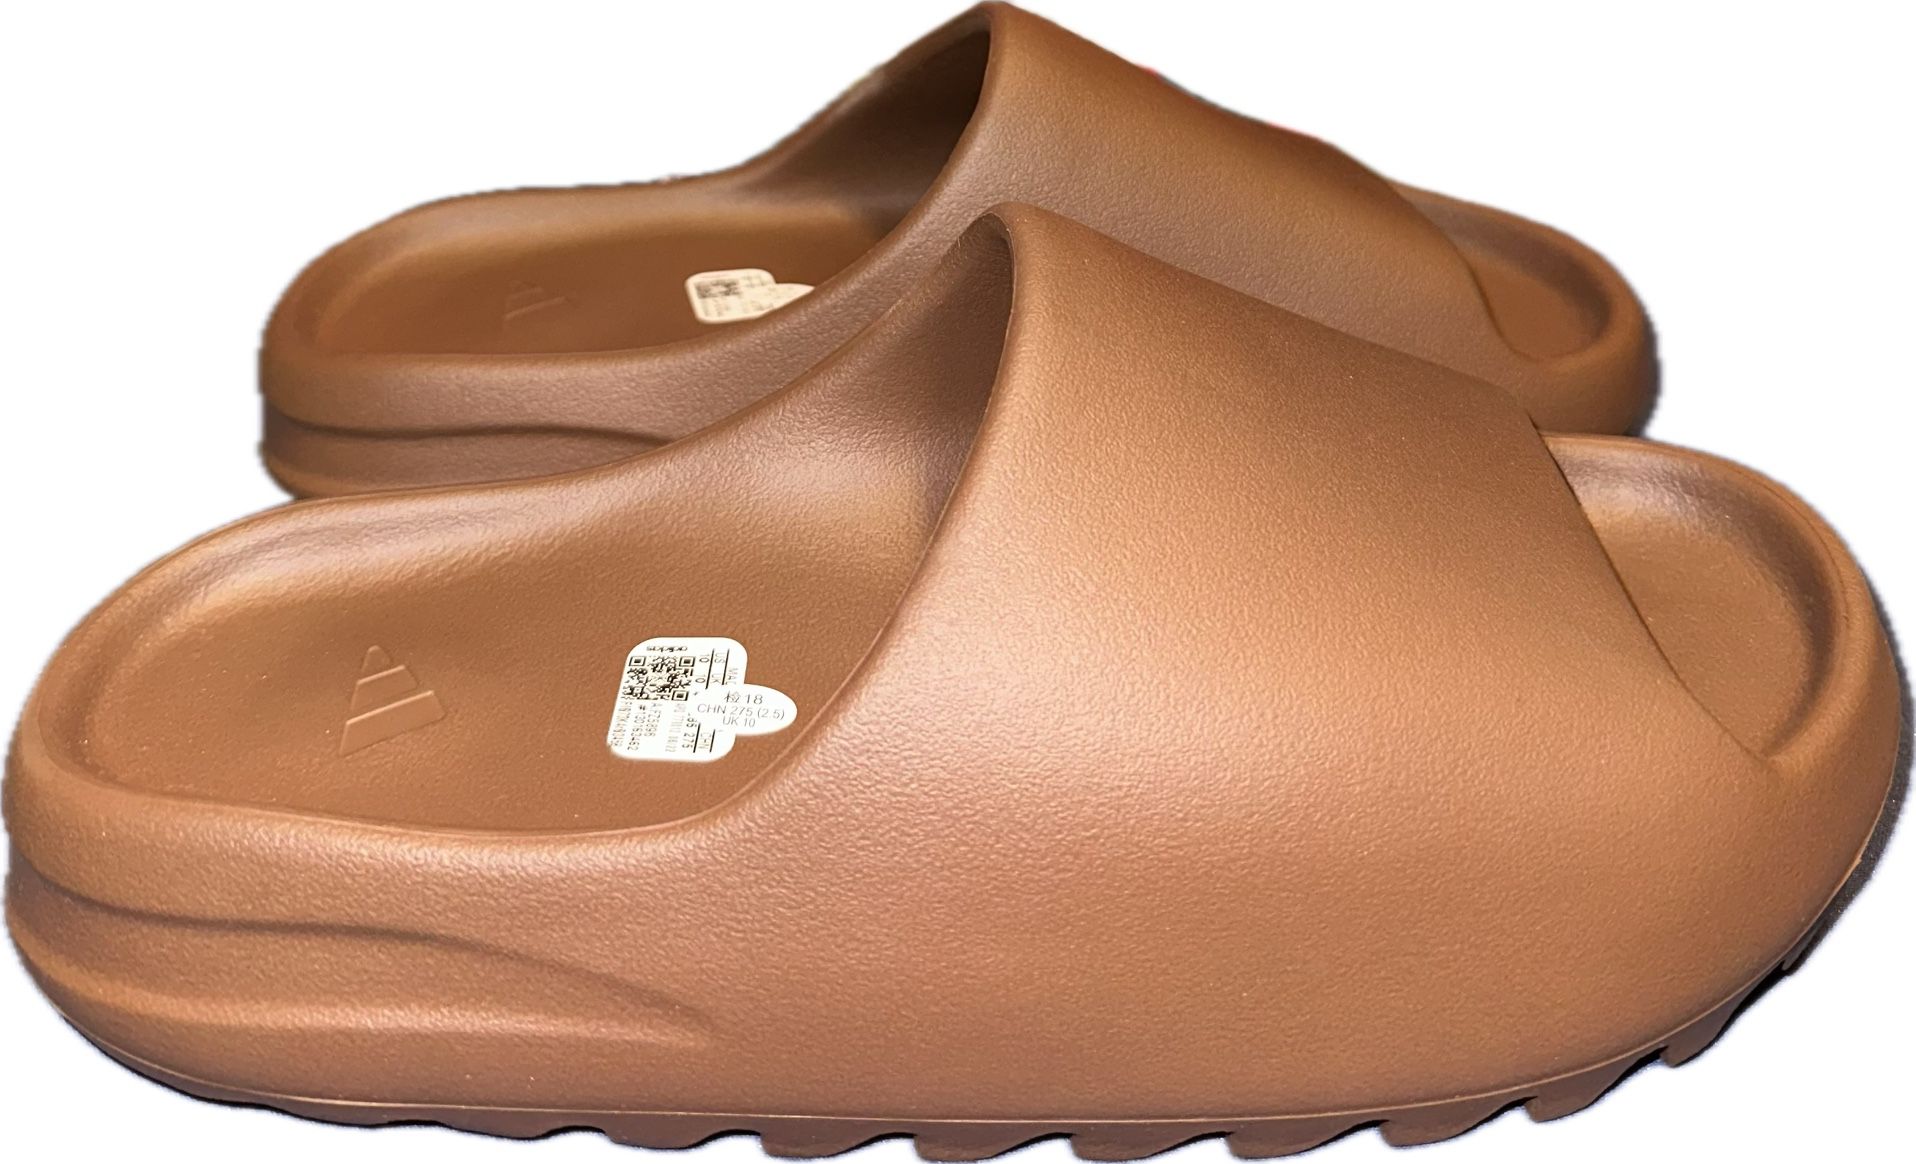 Adidas Yeezy Slide “Flax” Size 10